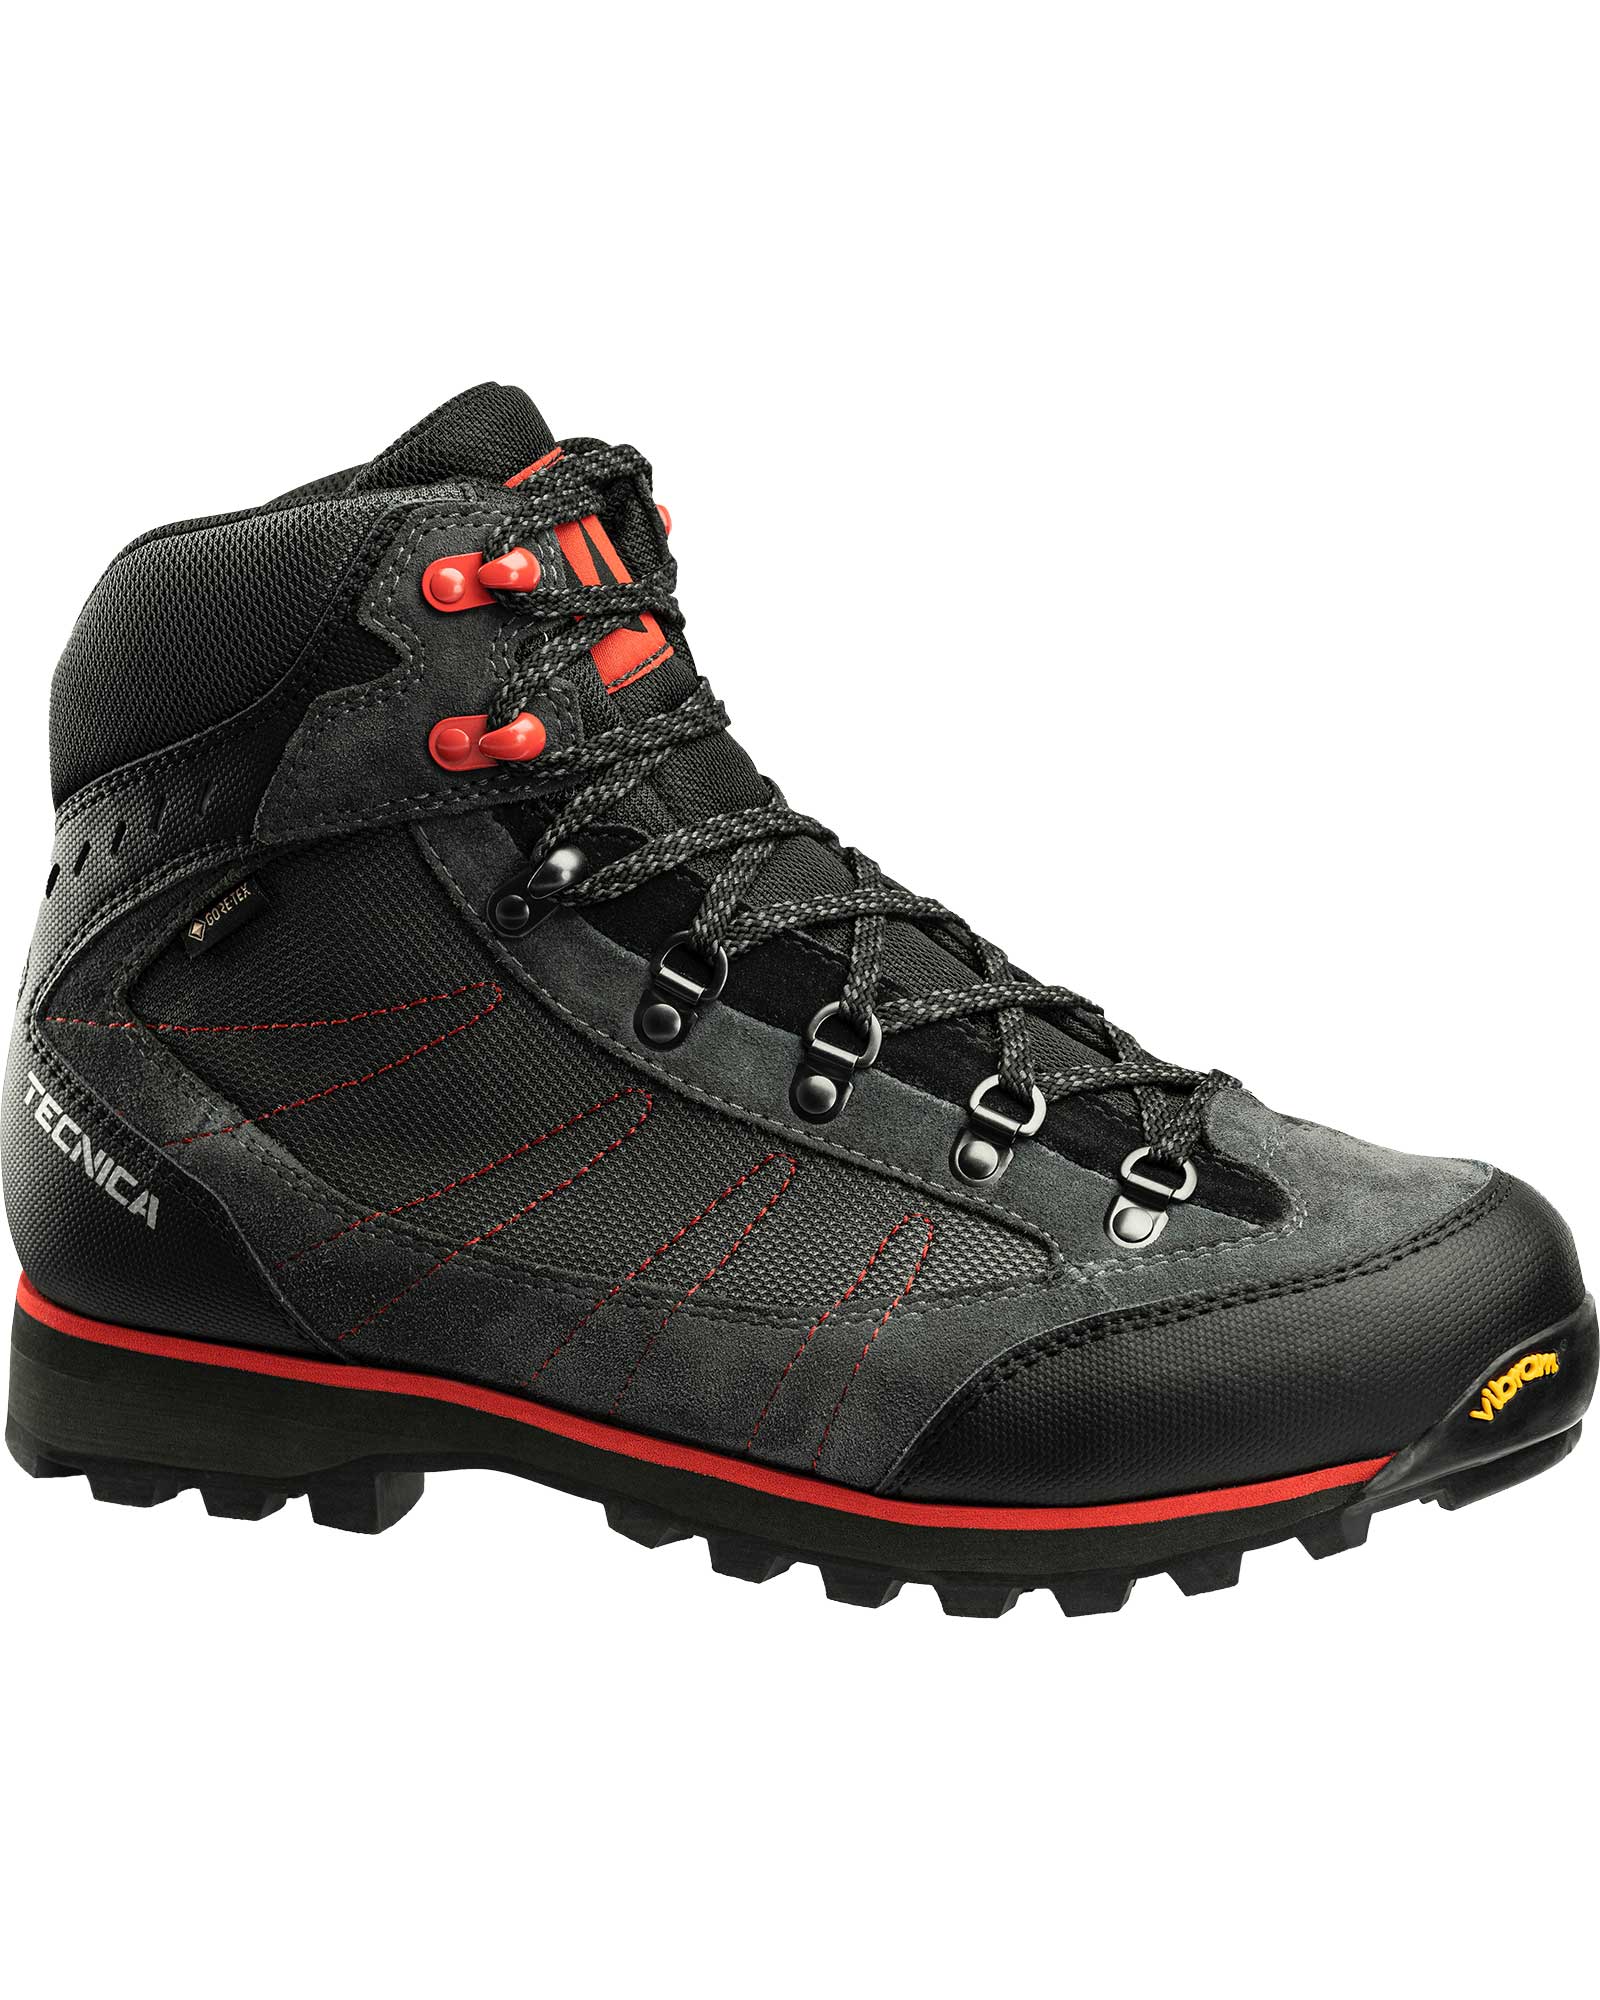 Tecnica Makalu IV GORE TEX Men’s Boots - Shadow Piedra/Rich Lava UK 9.5